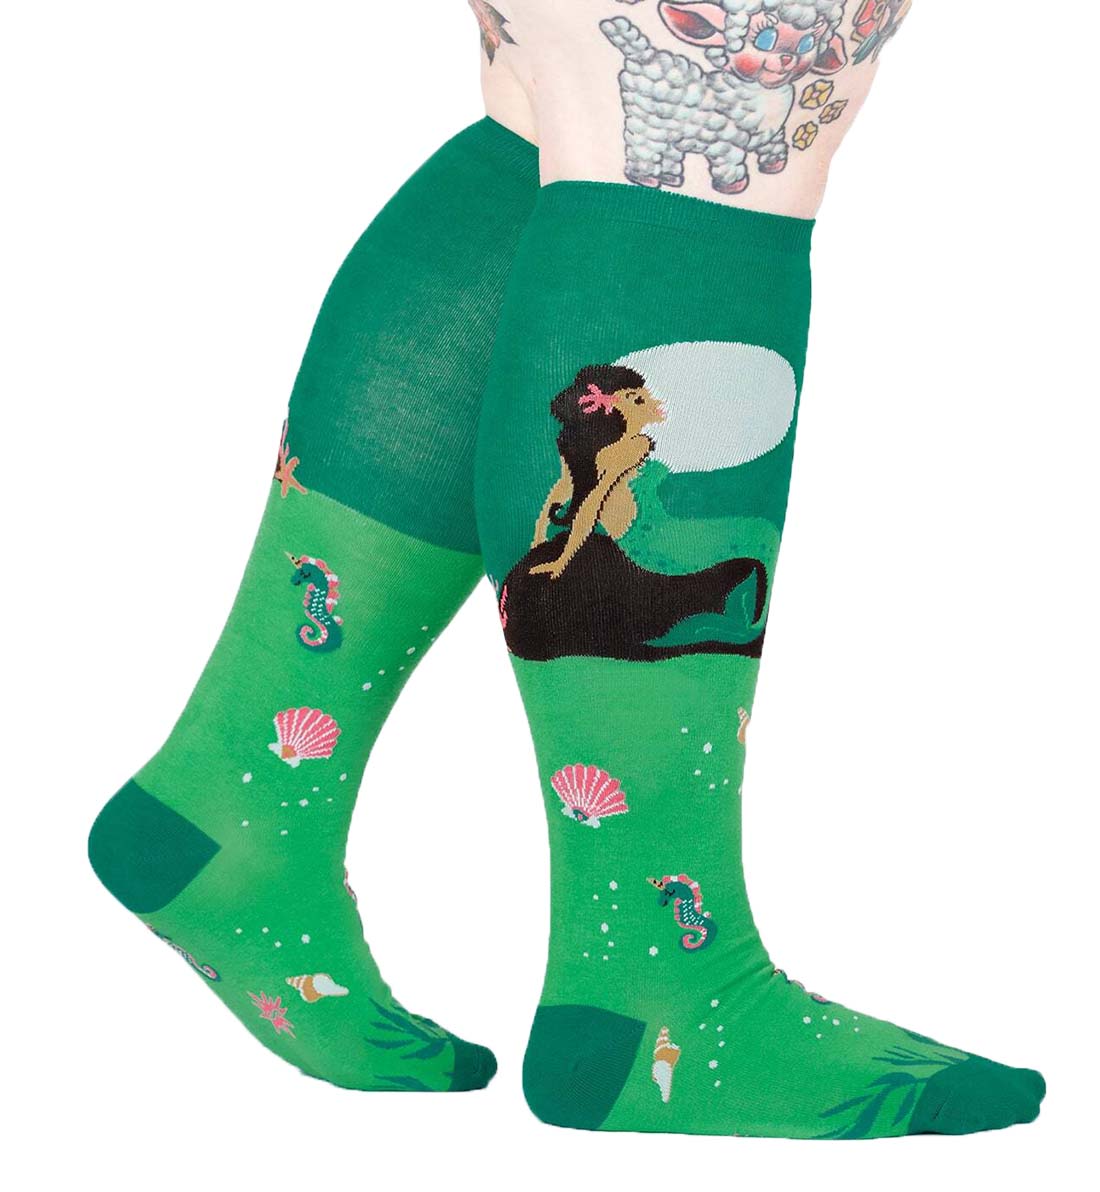 SOCK it to me Unisex Stretch-It Knee High Socks (s0085),Moonlight Mermaid - Moonlight Mermaid,One Size